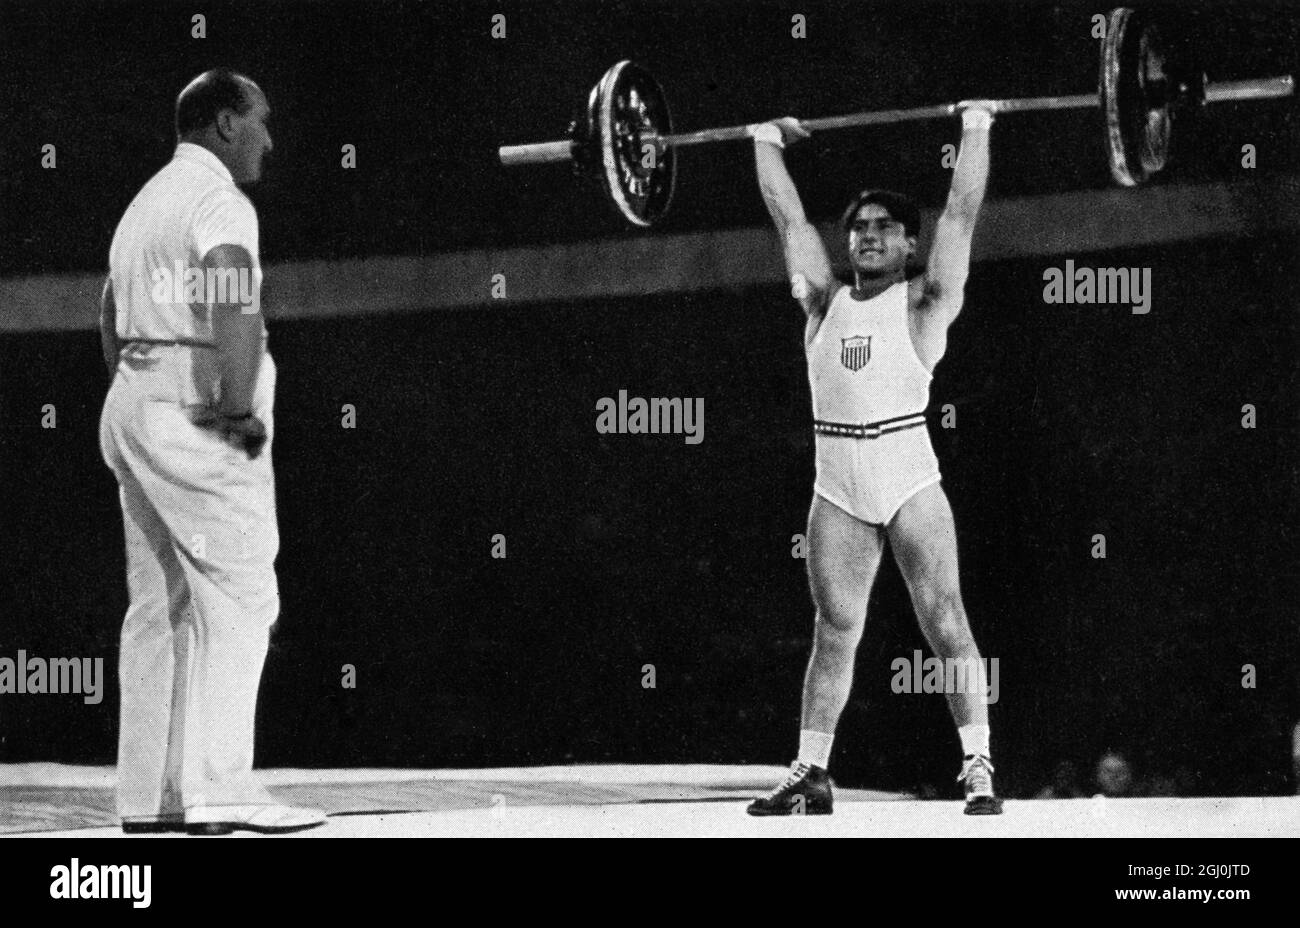 Olympia 1936, Berlin - der Olympiasieger im Feder-Federgewicht, Anthony Terlazzo aus den USA, hob insgesamt 312.5 kg. (Der Olympiasieger im Federgewicht, Anthony Terlazzo-USA, stemmte insgesamt 312,5 kg.) ©TopFoto Stockfoto